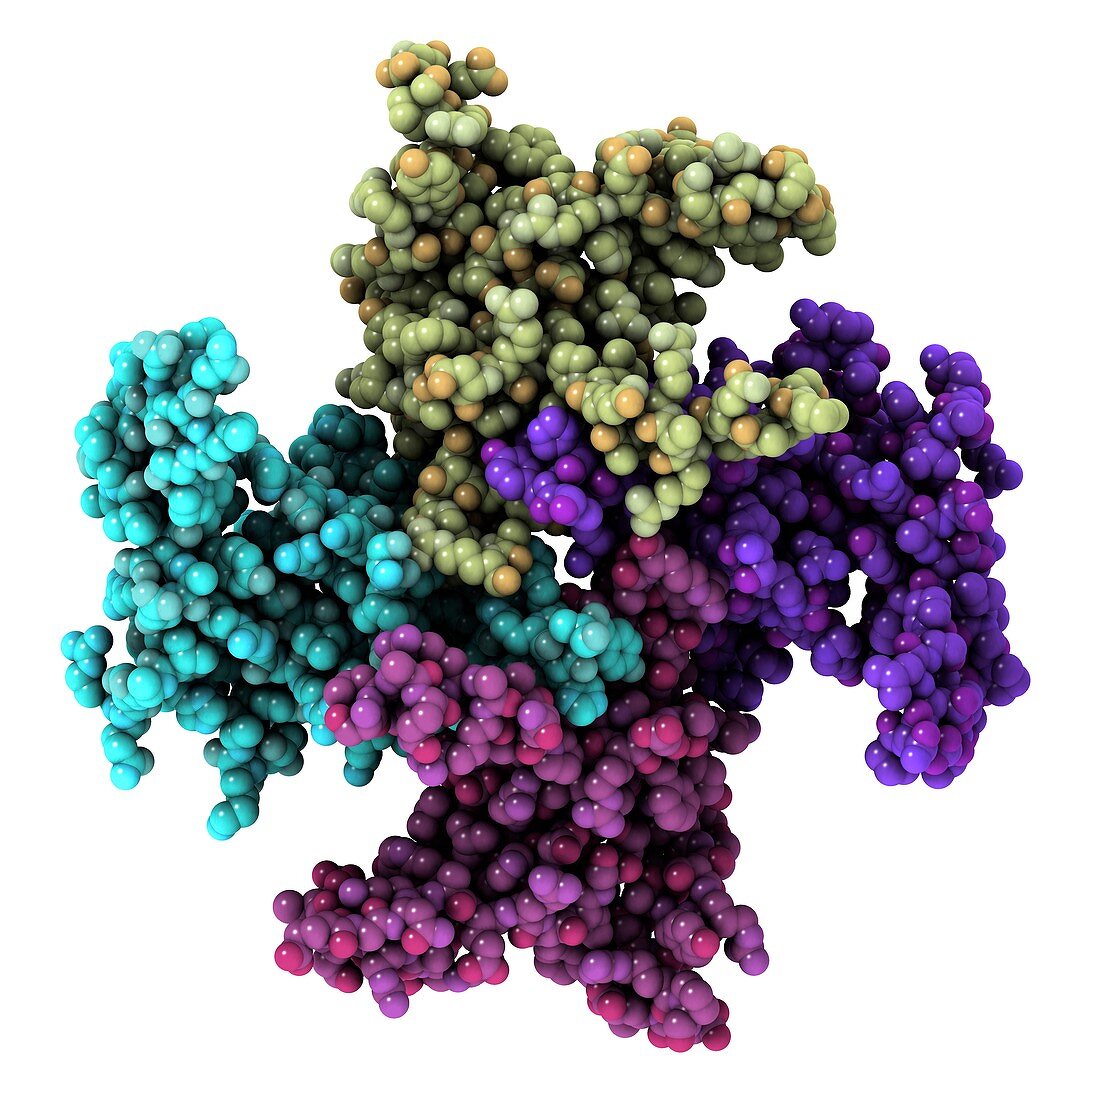 Mitochondrial RNA binding proteins